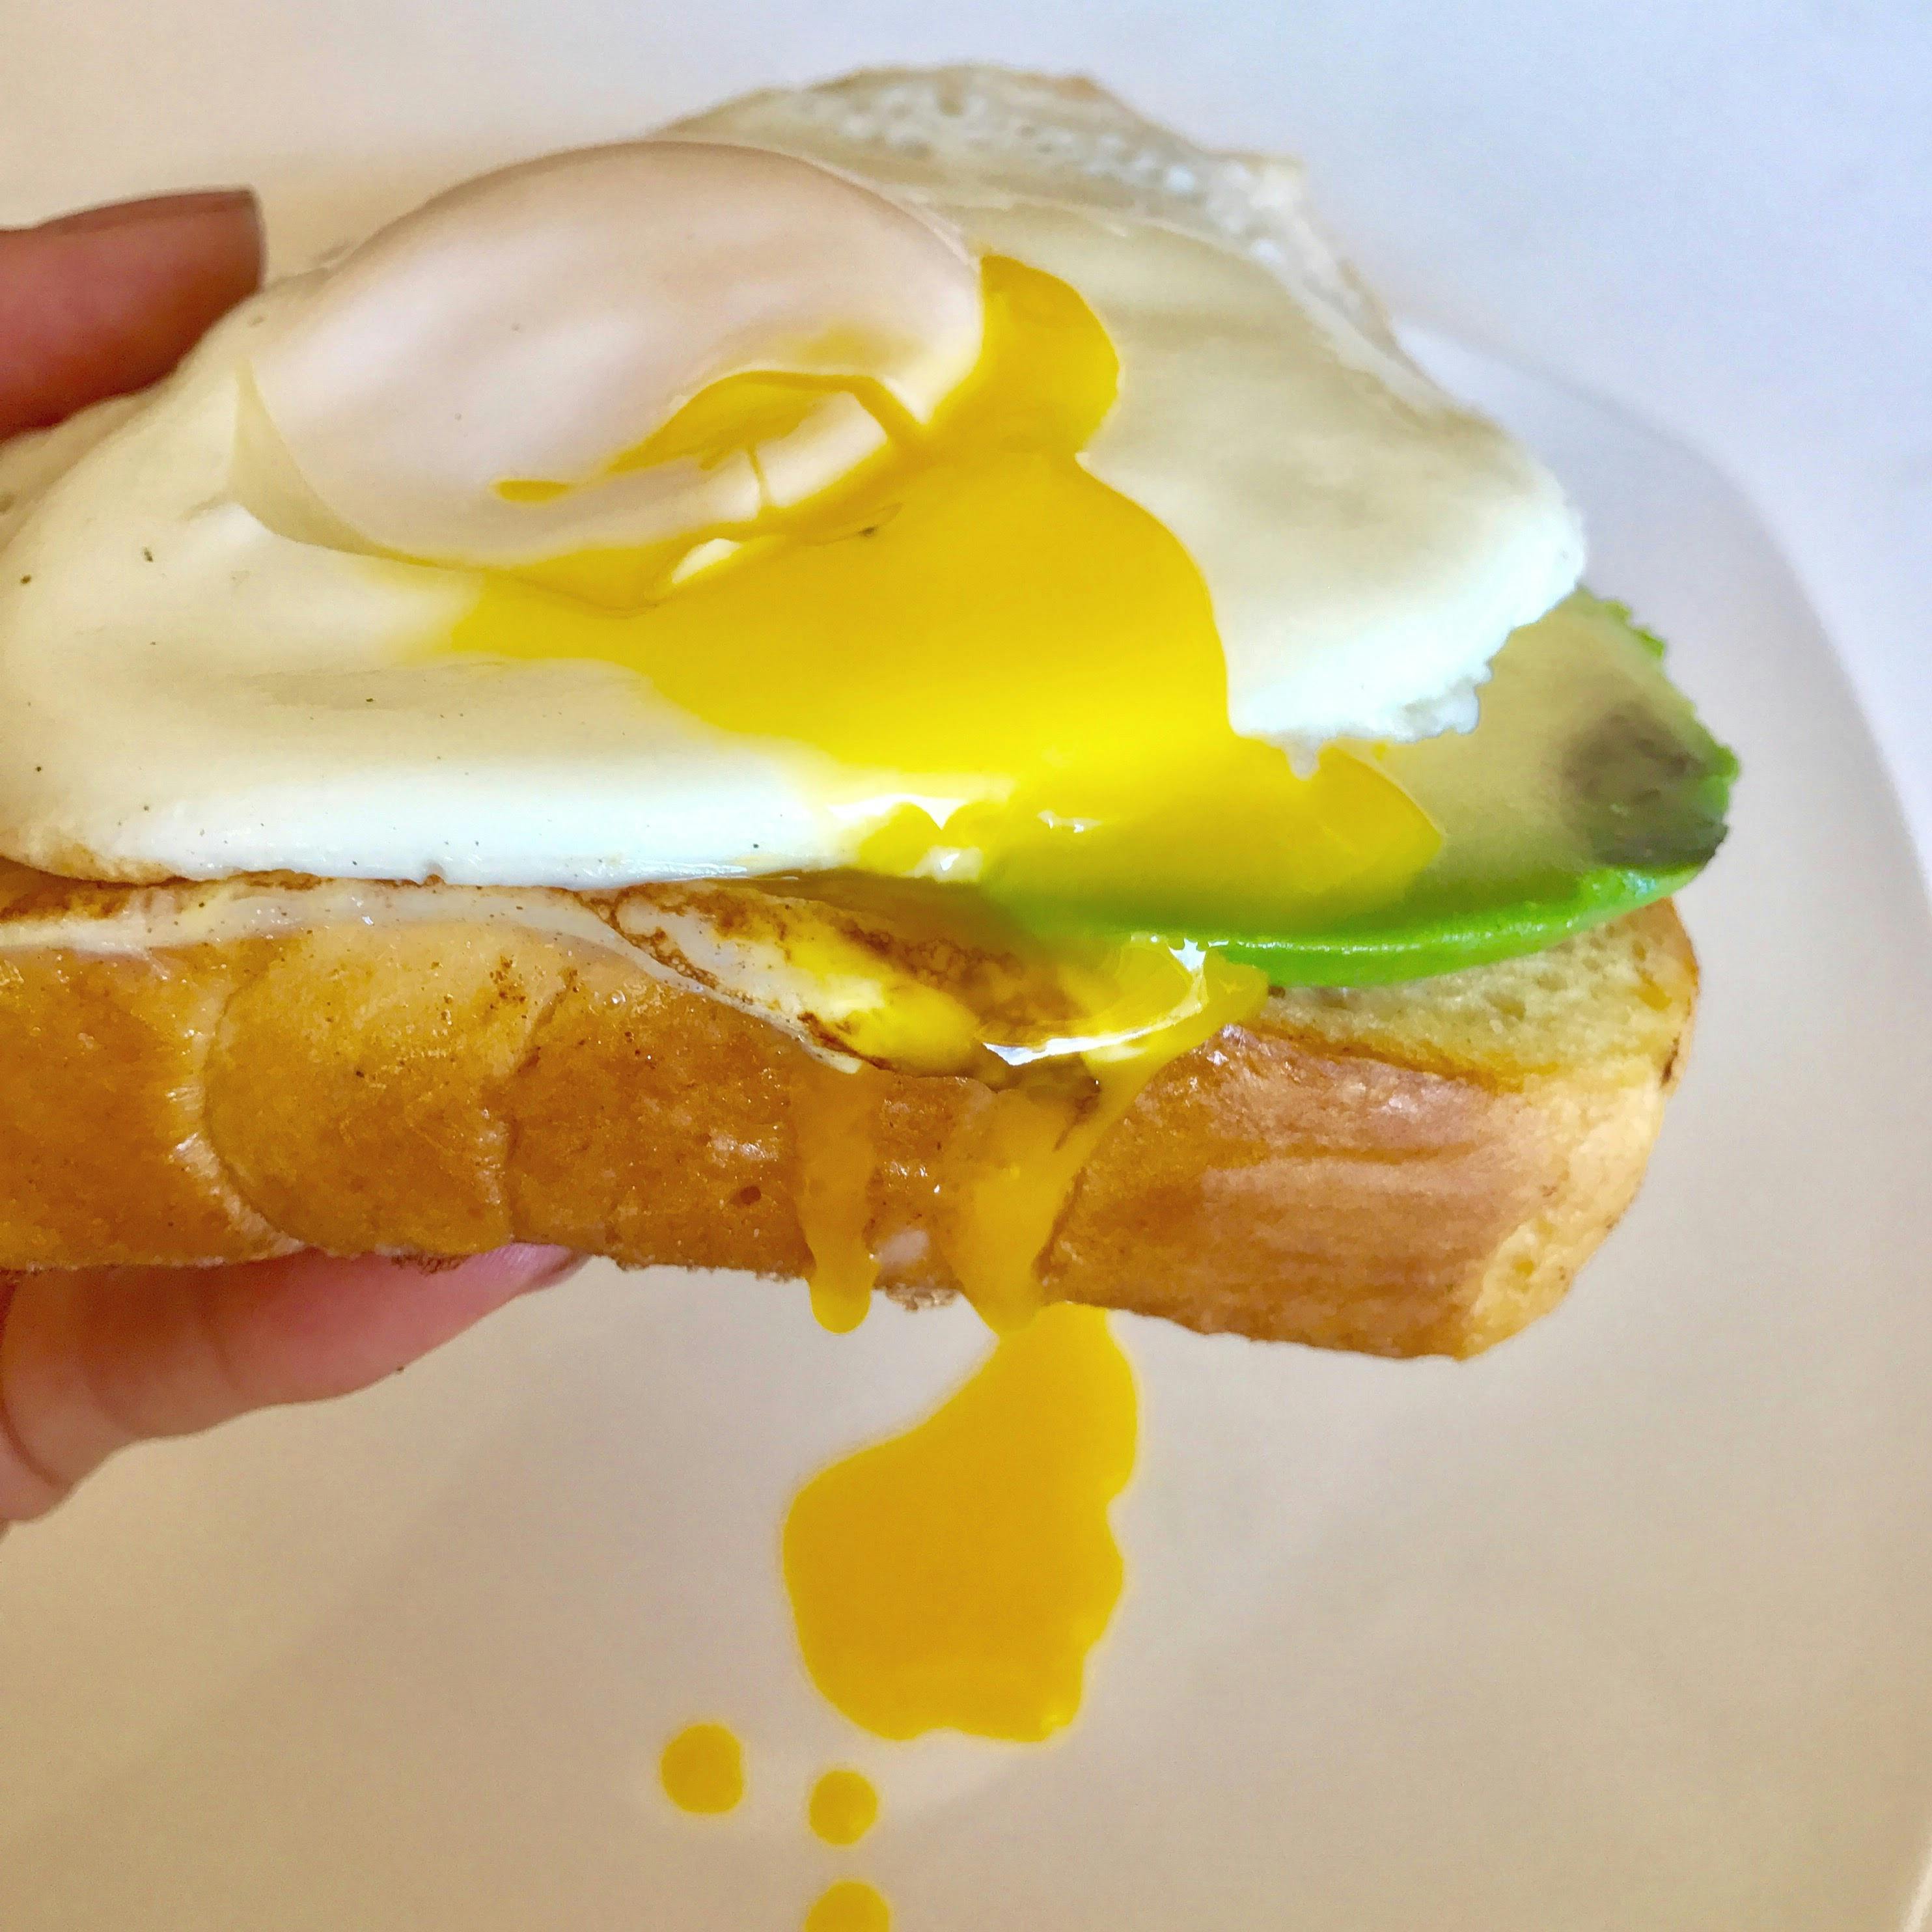 Free stock photo of Egg sandwich, egg yolk